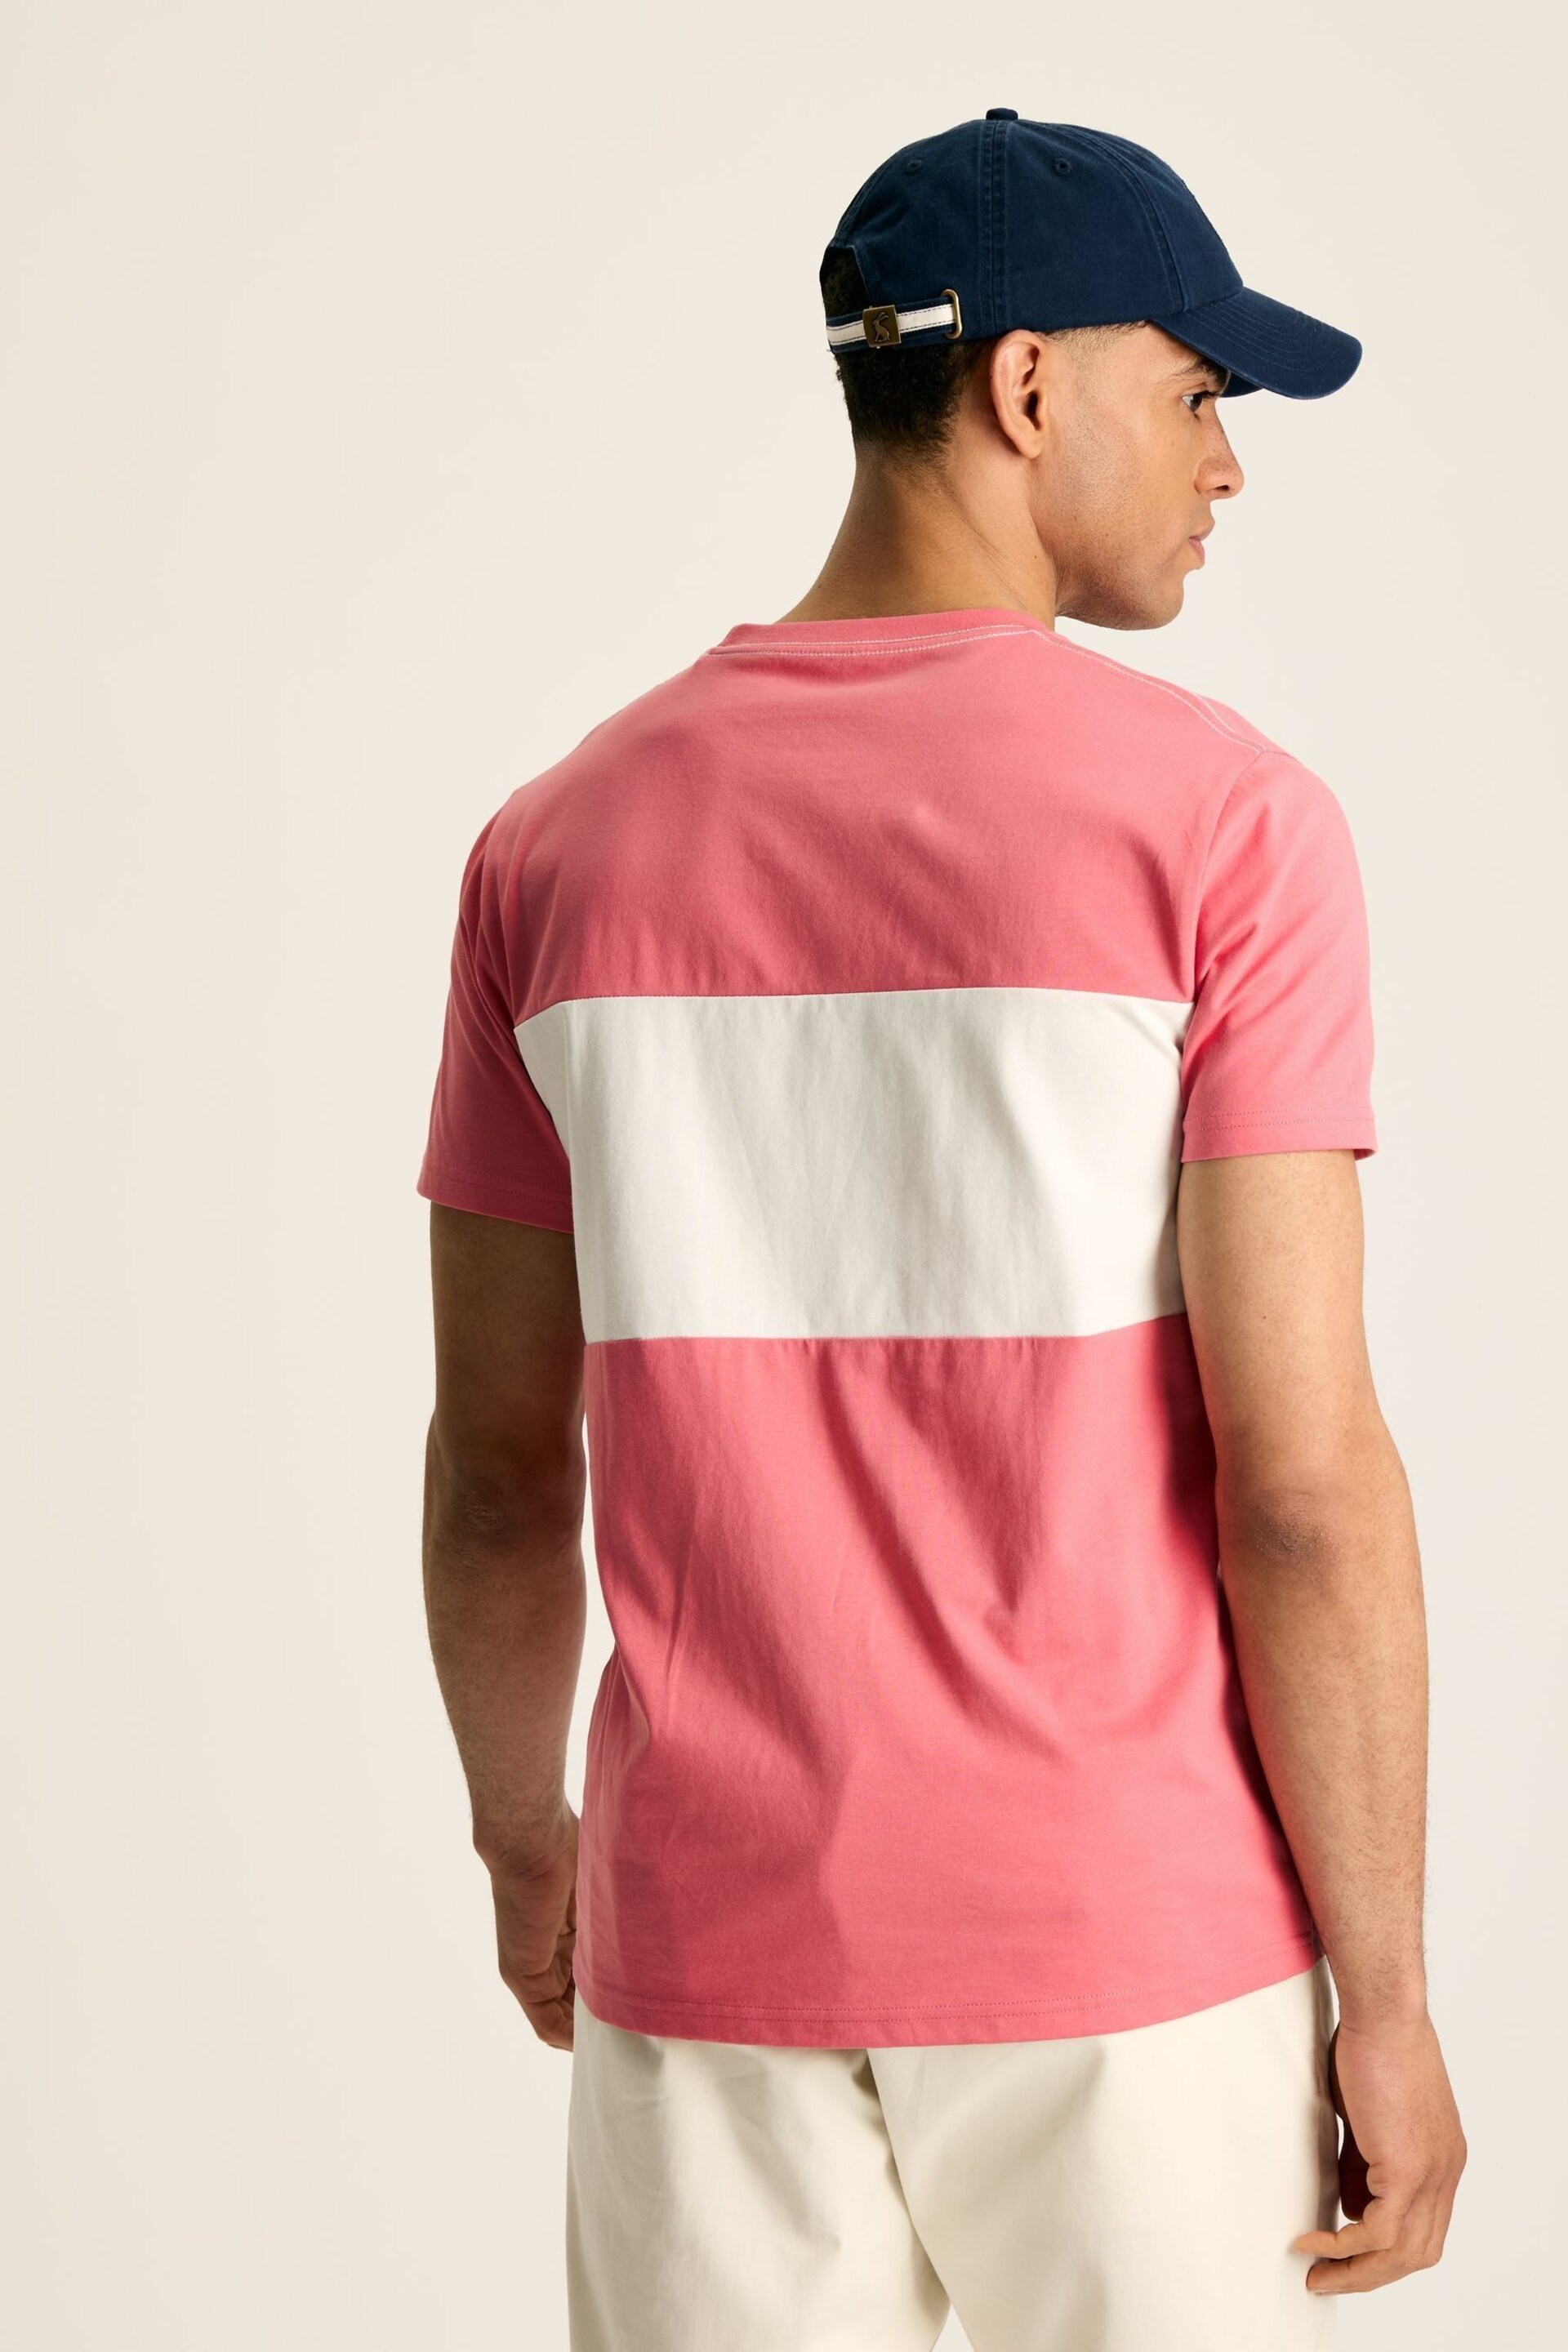 Joules Denton Pink Colourblock Jersey Crew Neck T-Shirt - Image 2 of 6